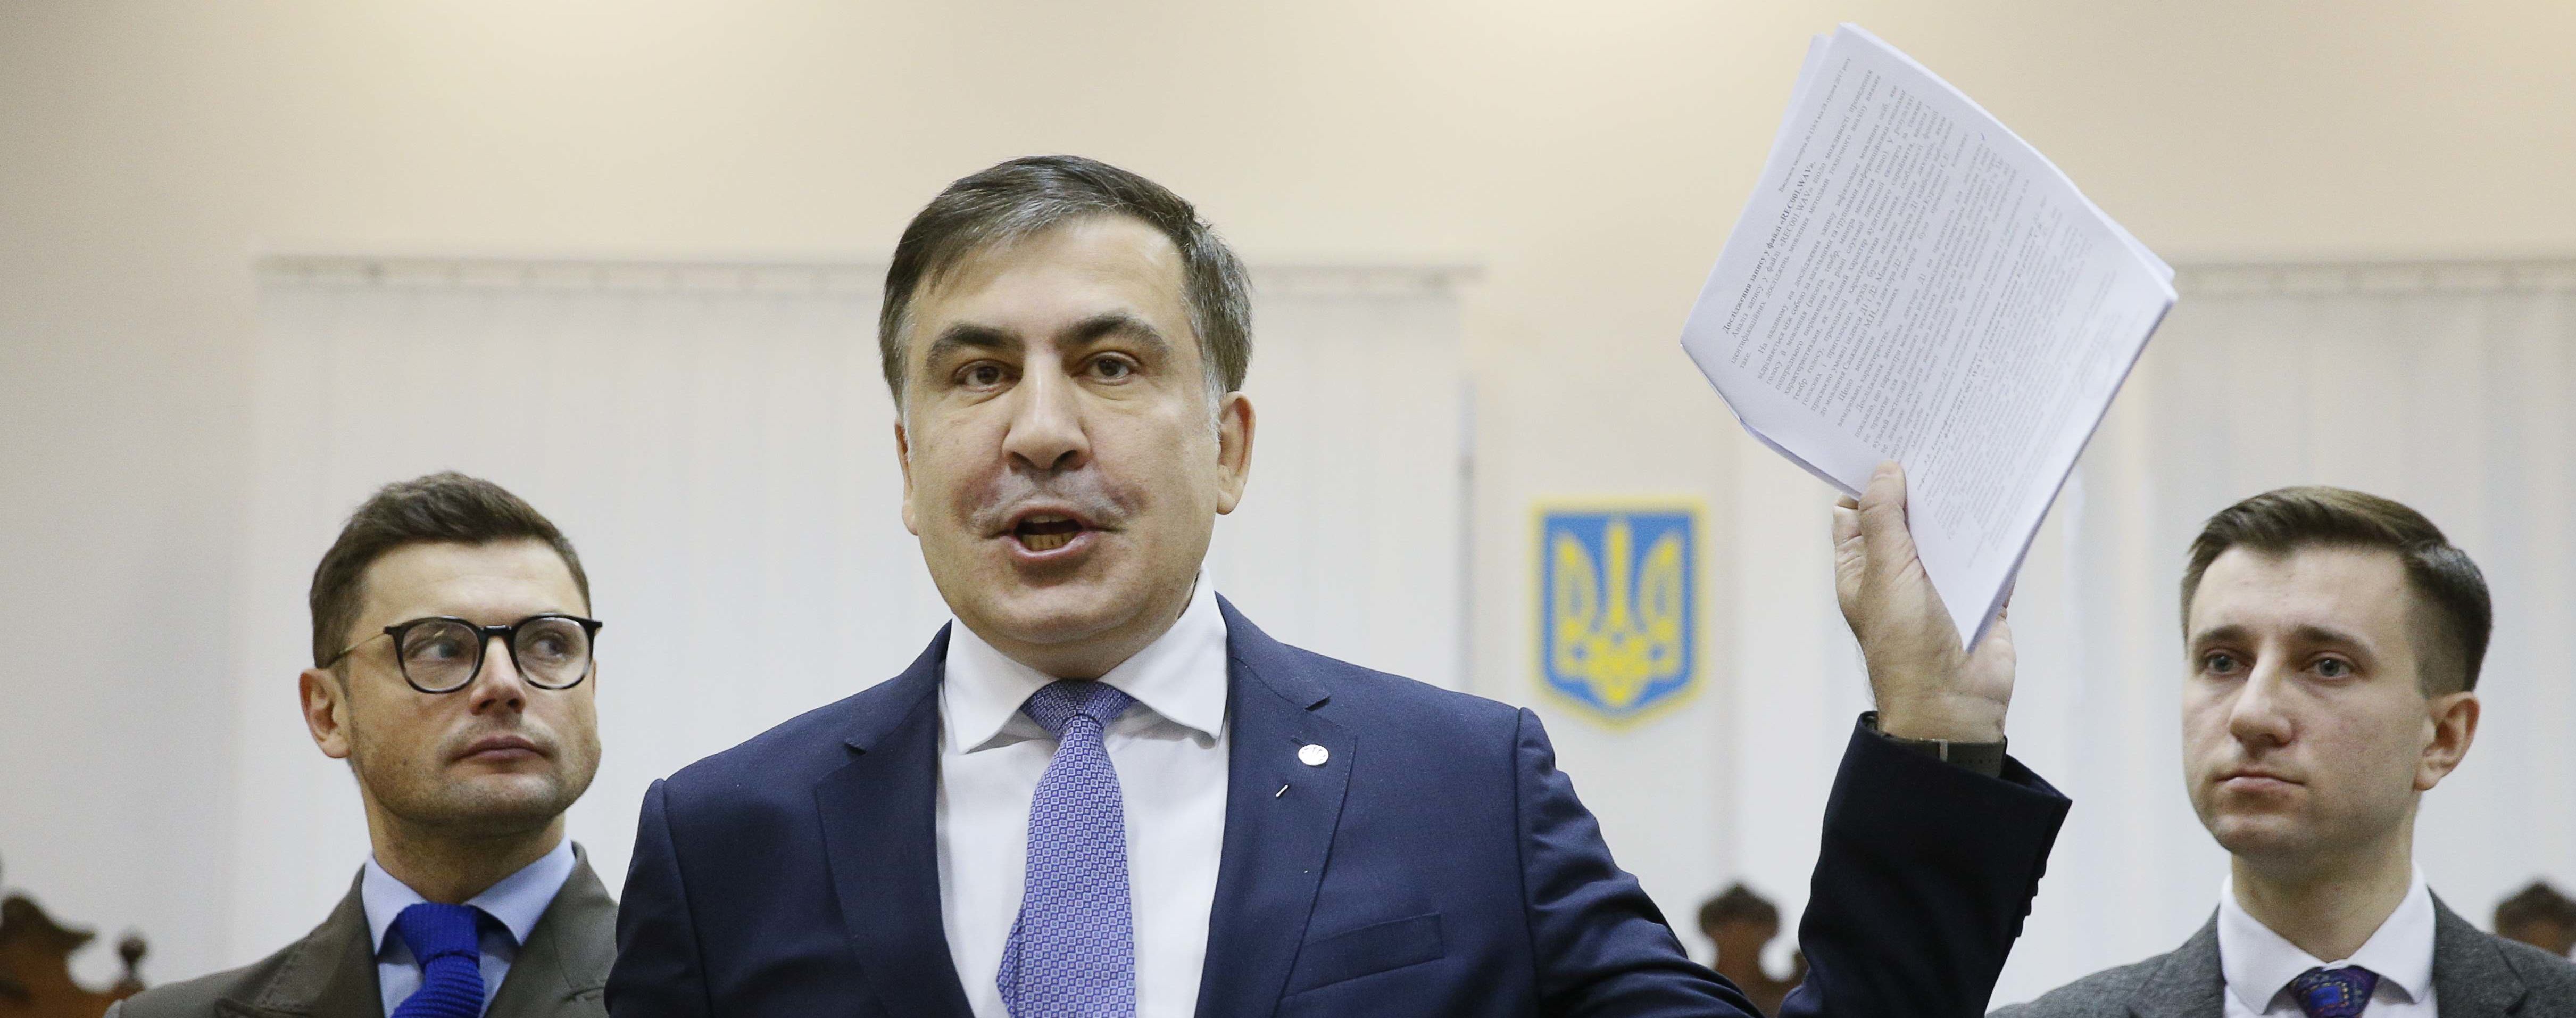 Саакашвили анонсировал "Марш за импичмент" на 4 февраля